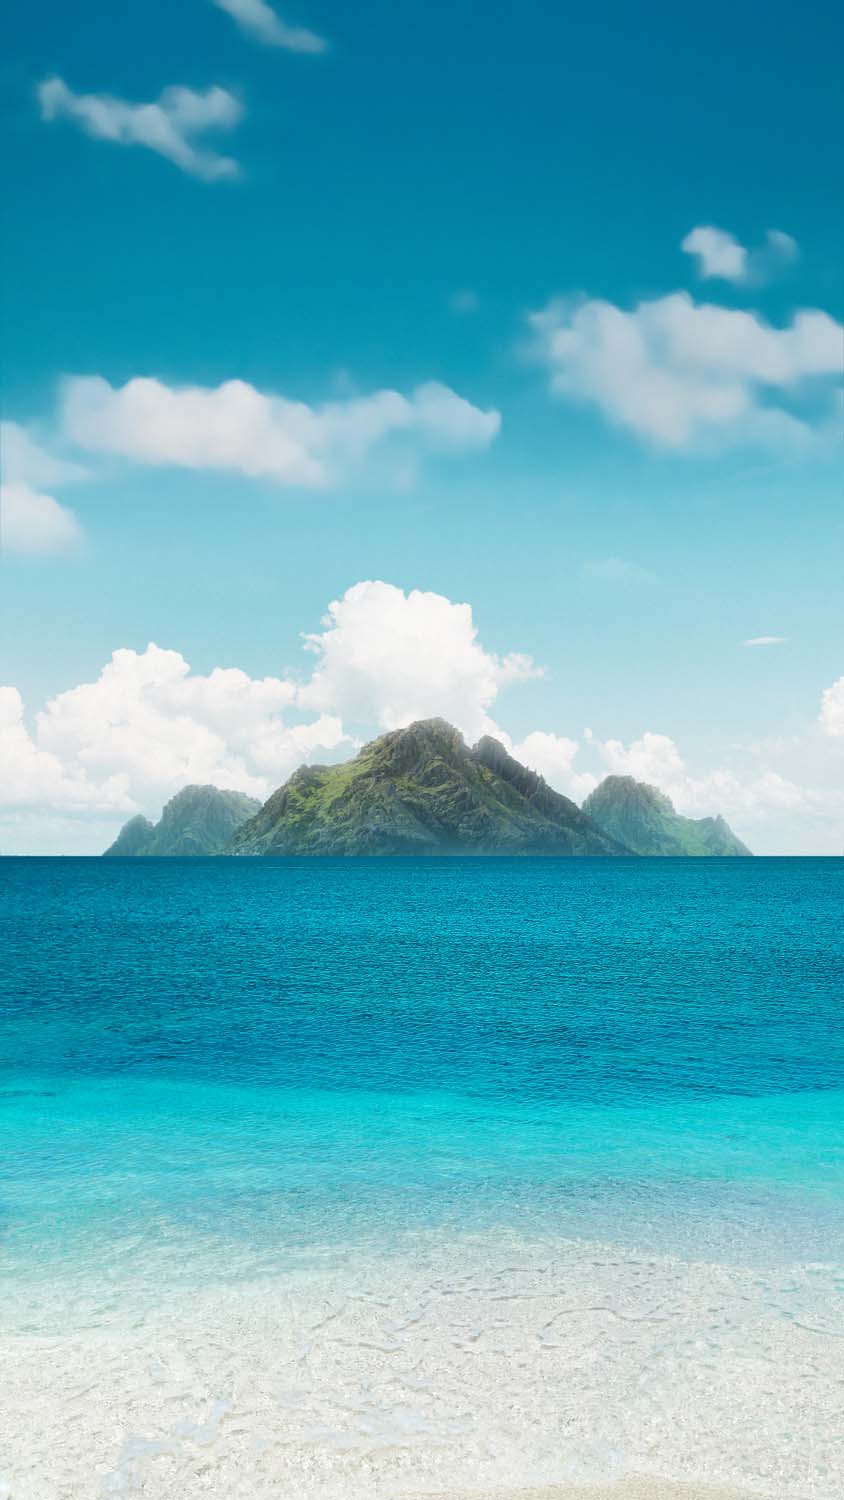 The Island iPhone Wallpaper HD